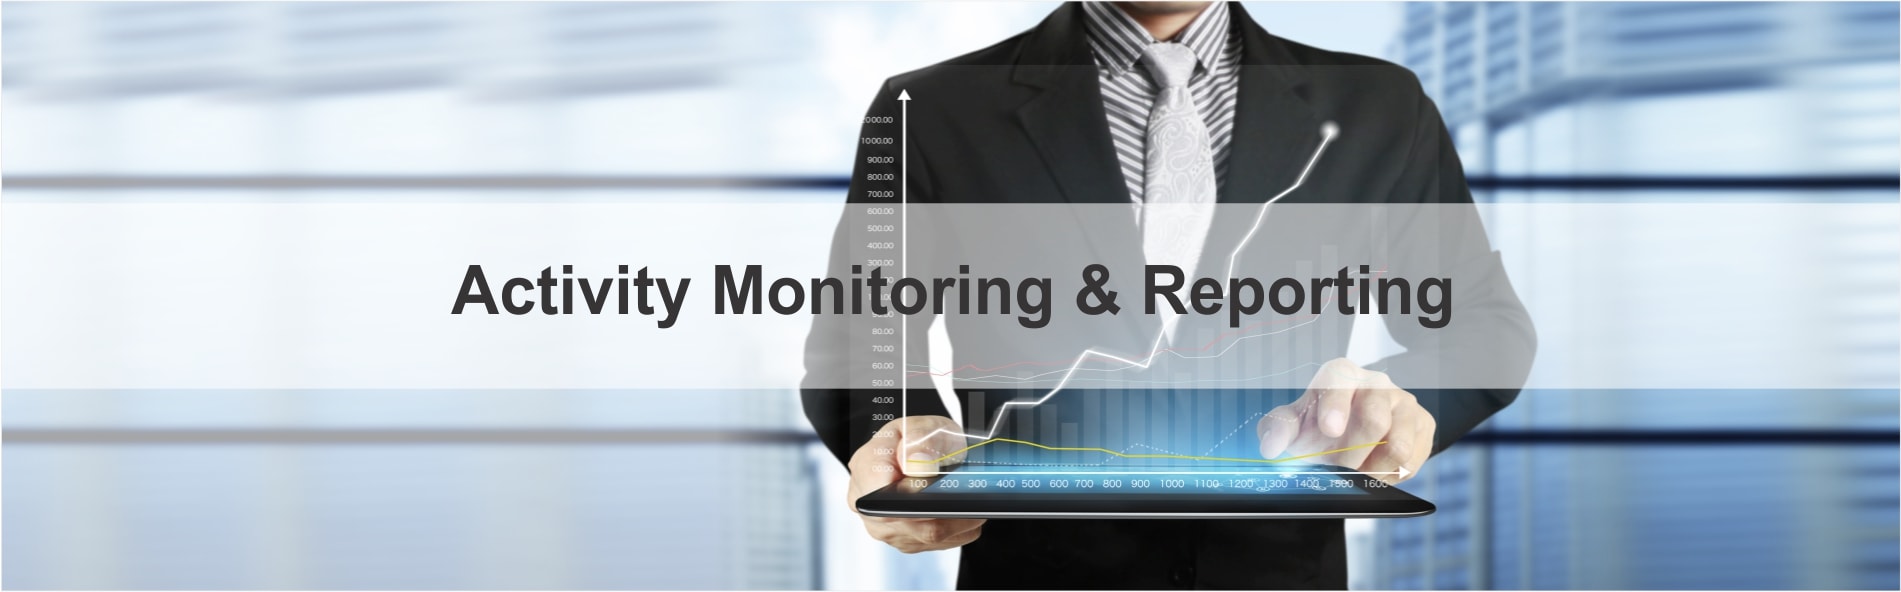 Activity Monitoring & Reporting